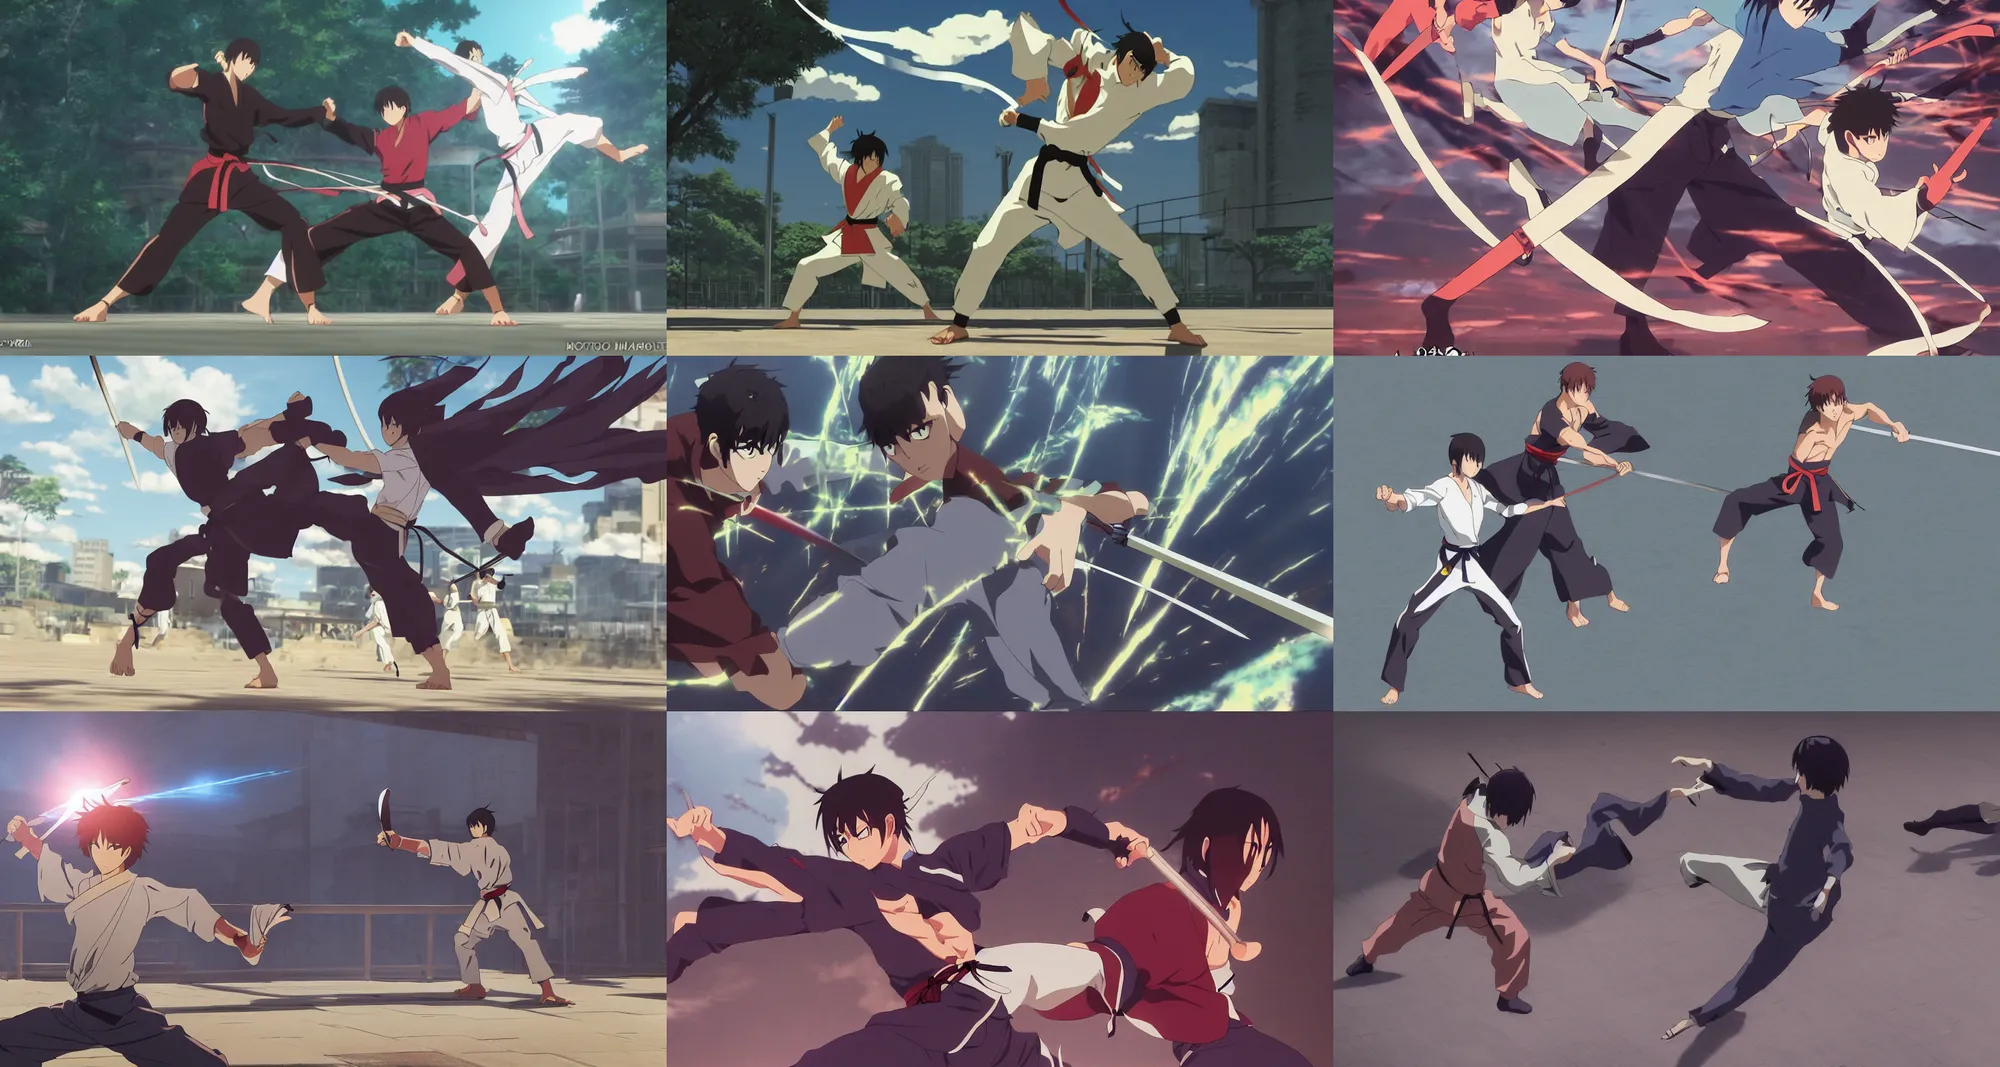 Anime Sword Poses - Anime females fighting pose